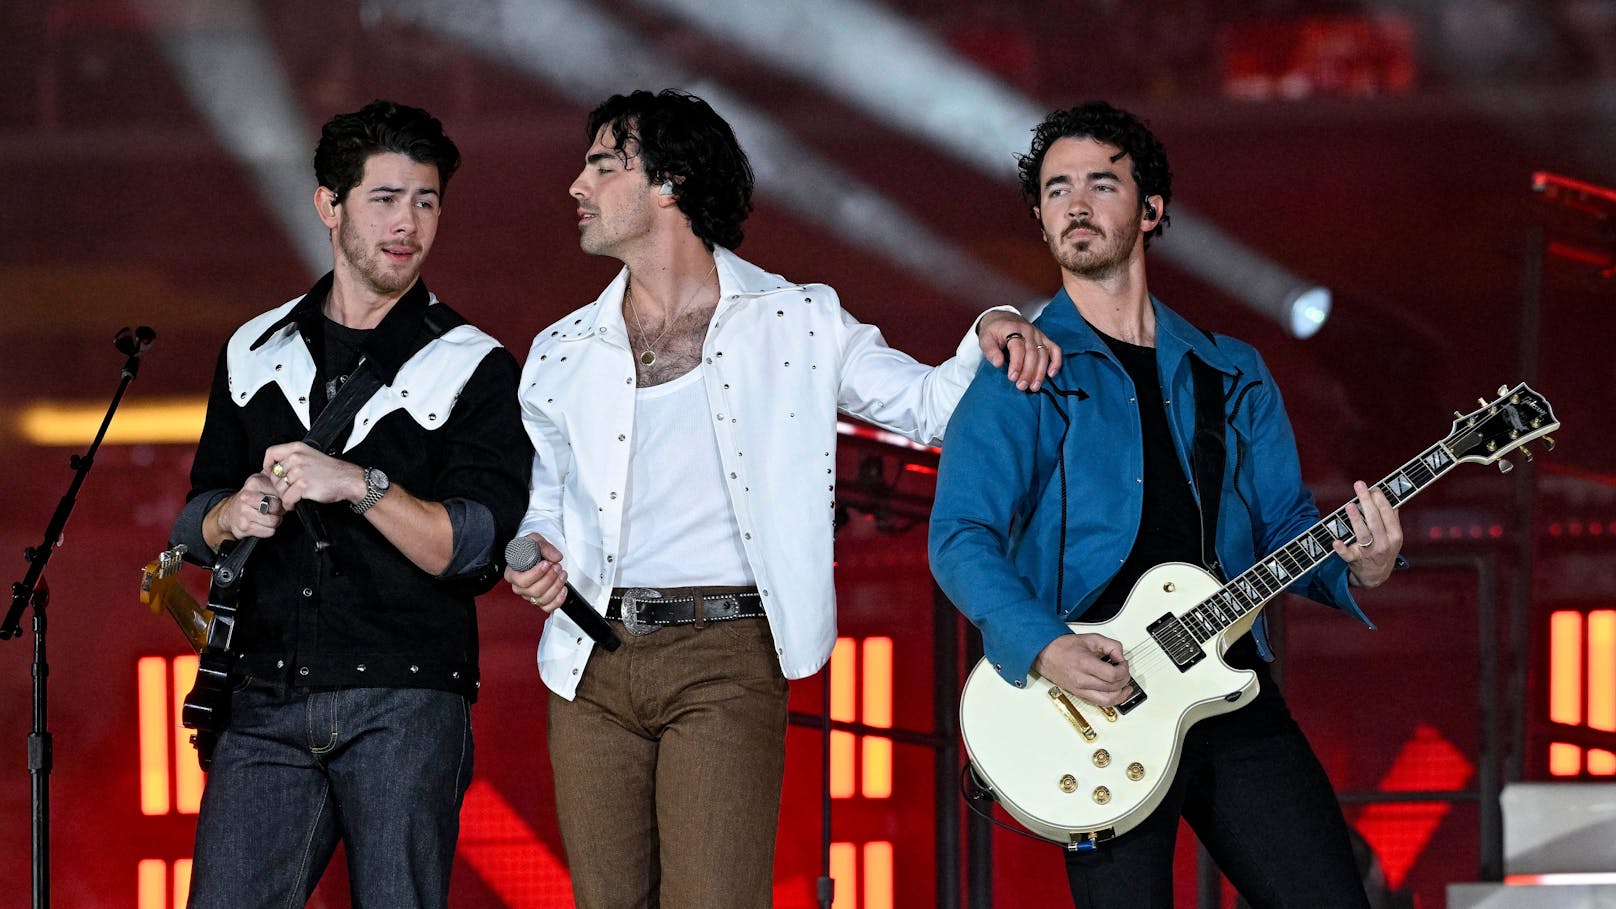 Kürzen Jonas Brothers kurz vor Wien-Konzert Setlist?